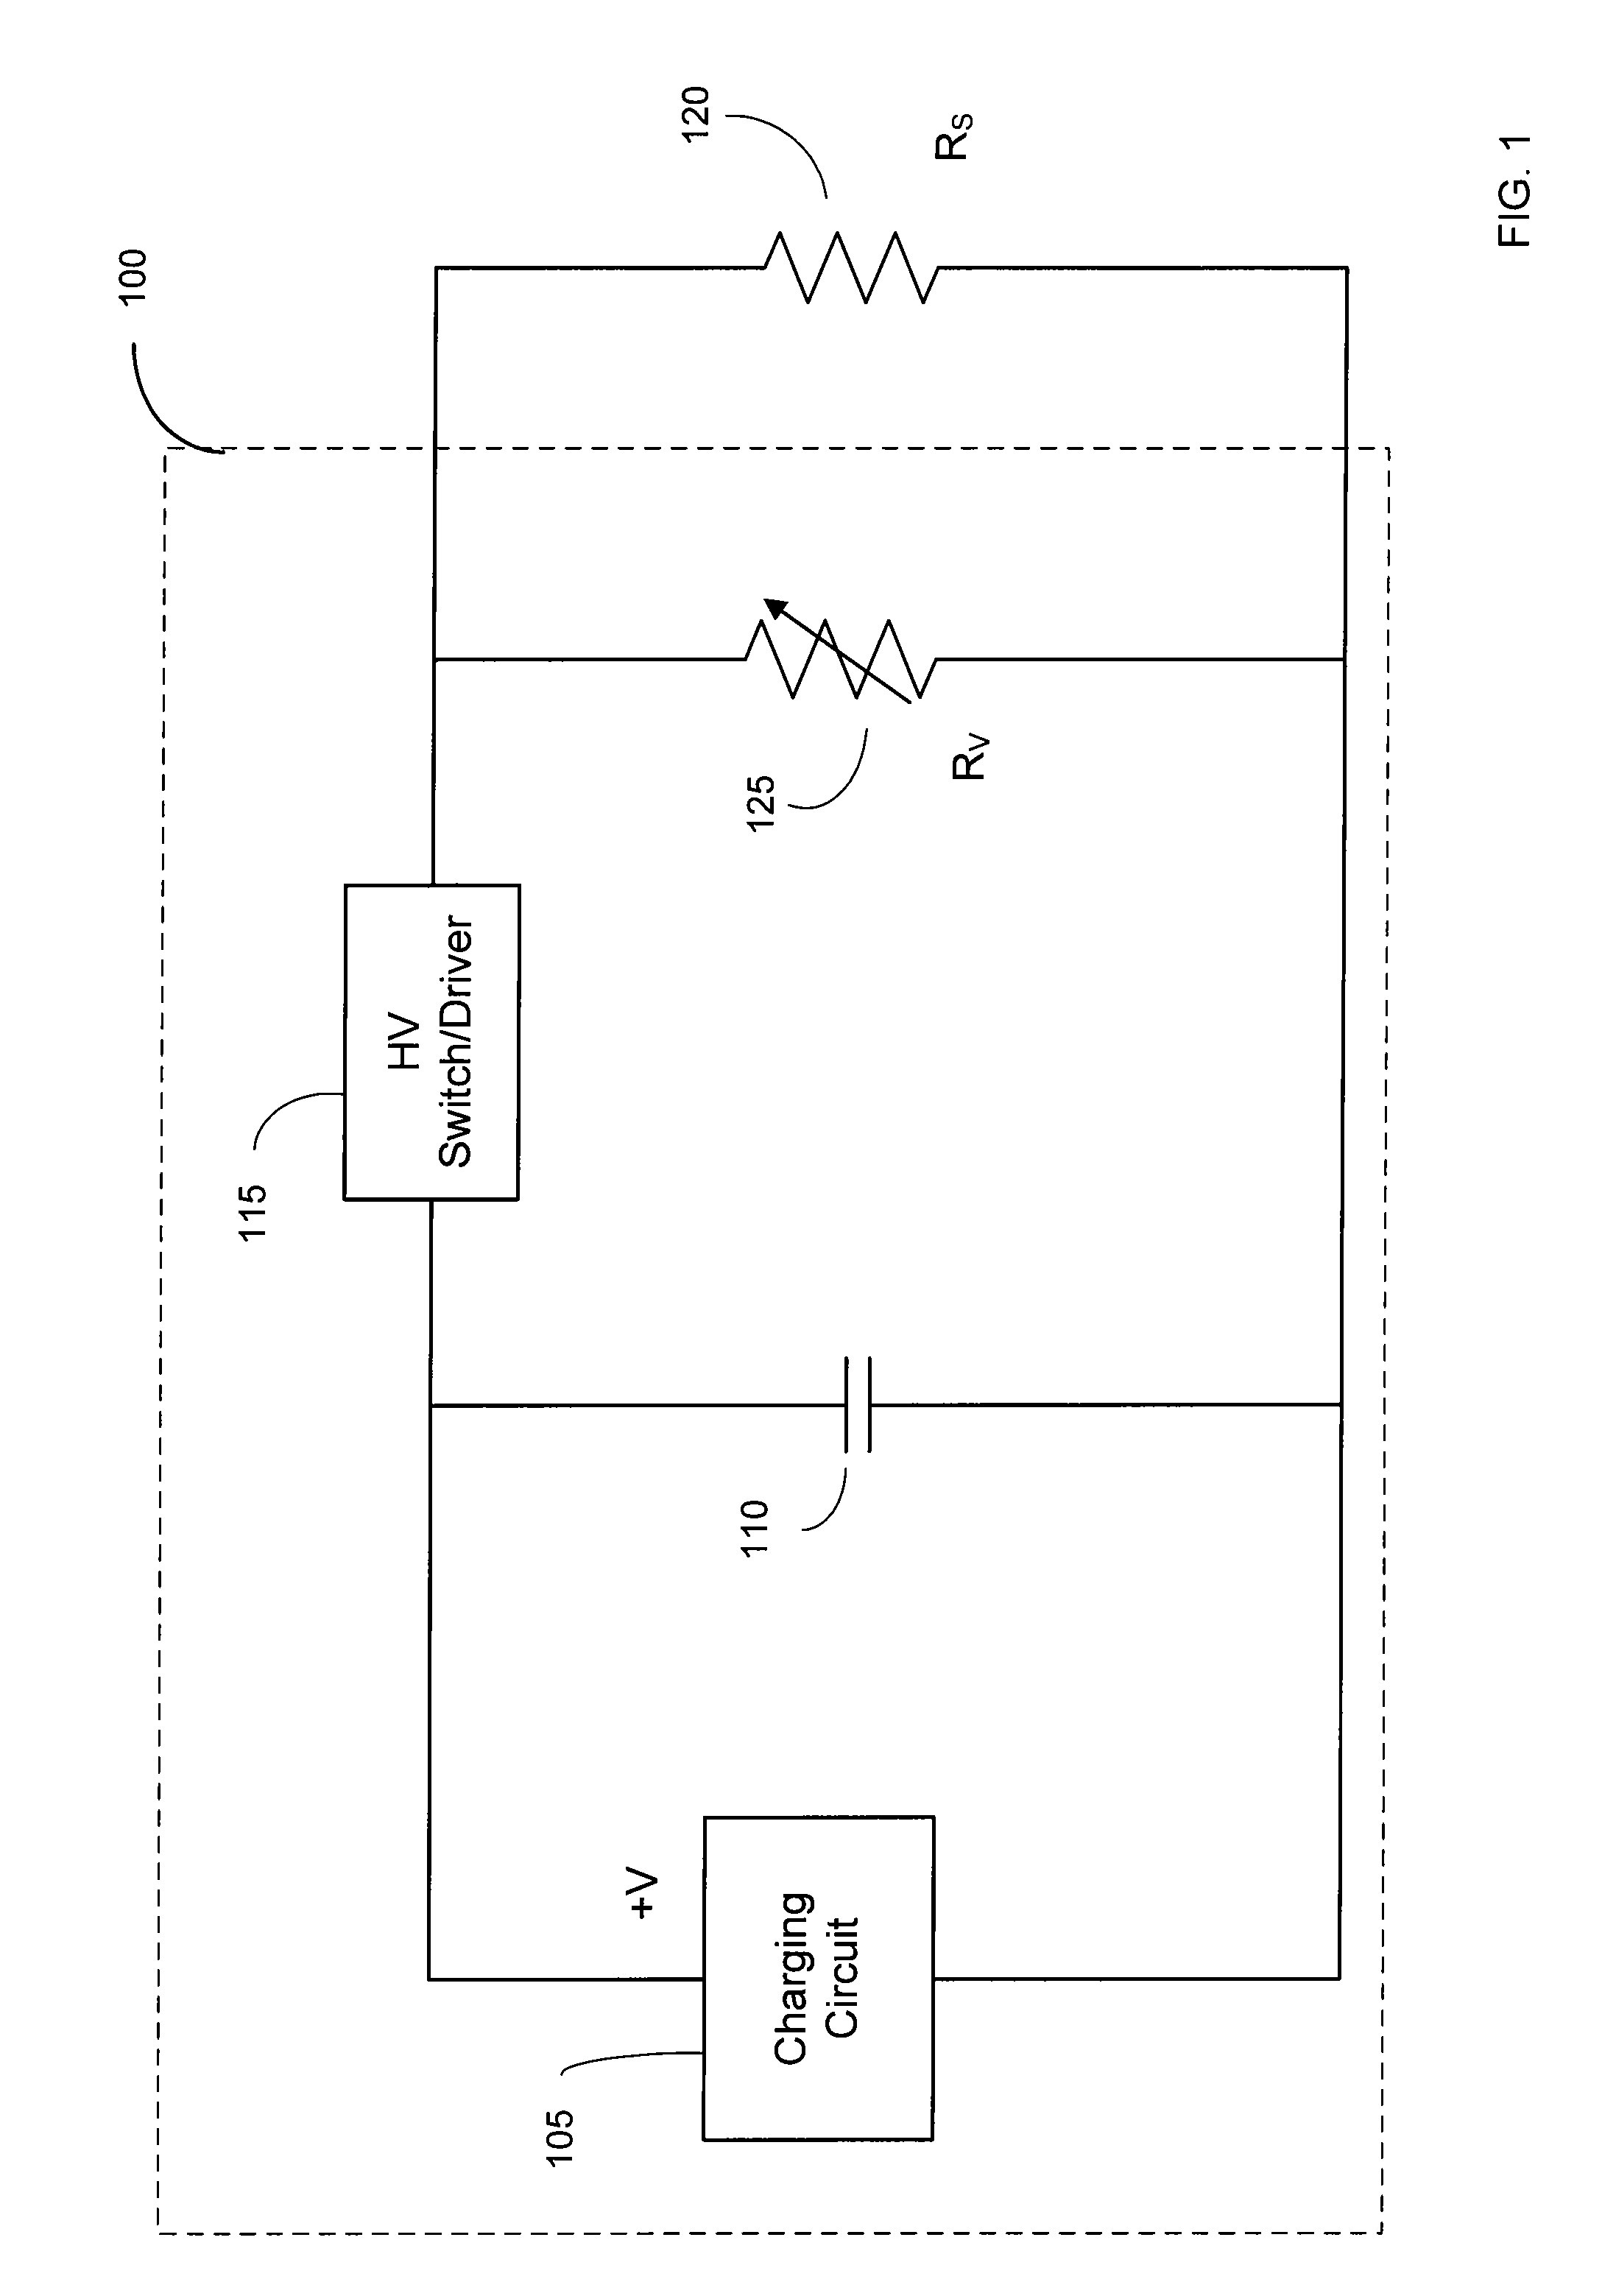 Multi-channel electroporation system